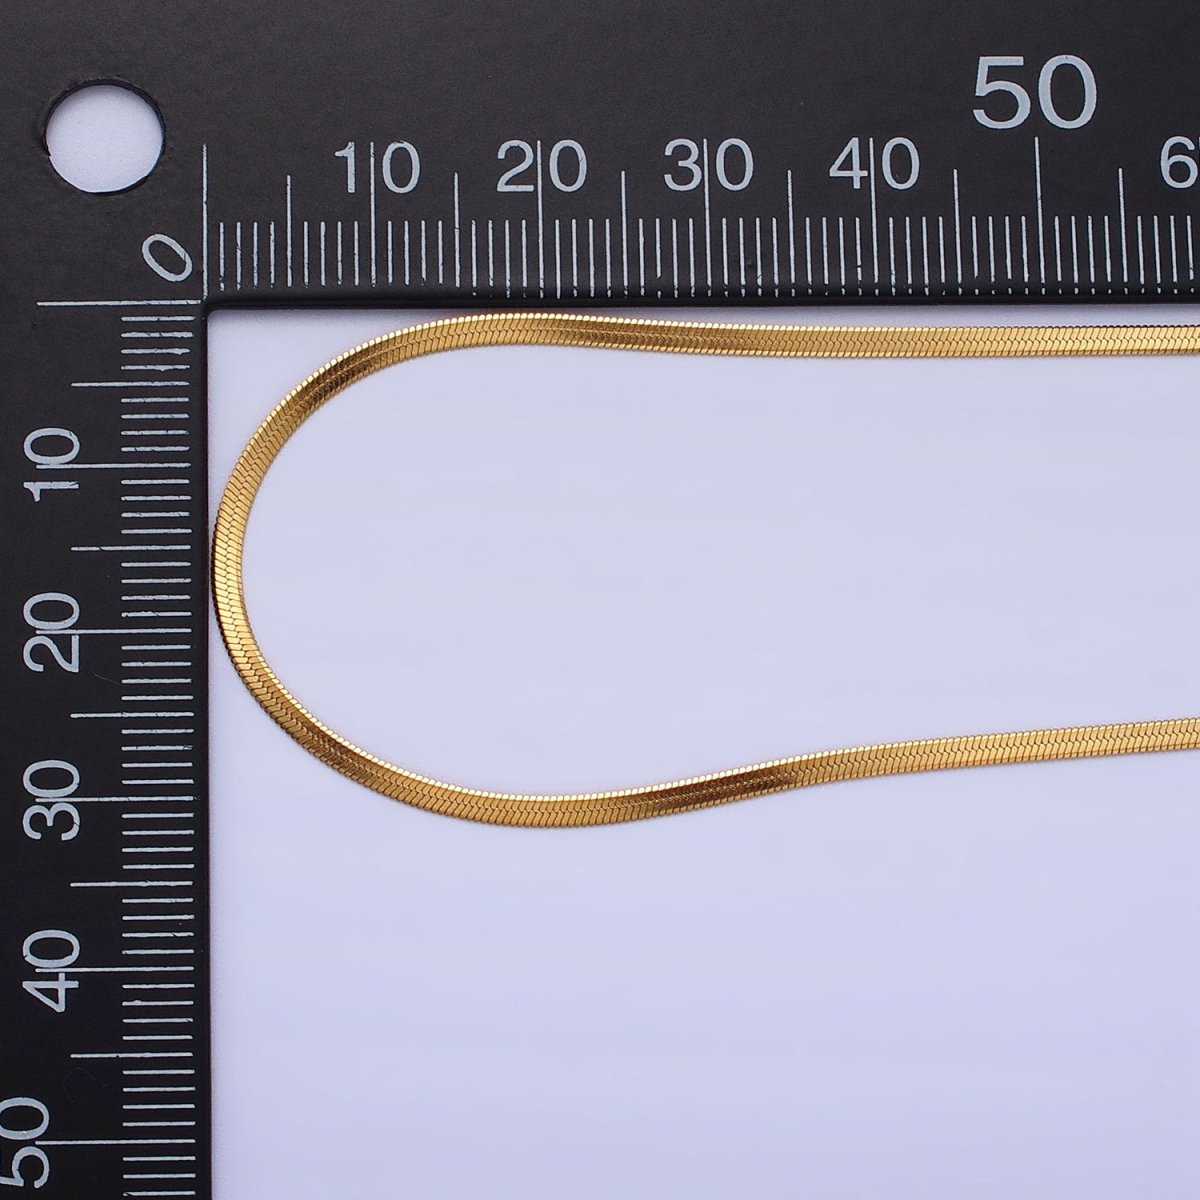 Dainty 2mm Gold Herringbone Chain Necklace Silver Flat Snake Chain Stainless Steel Chain 17.5 inch | WA-1550 WA-1551 - DLUXCA